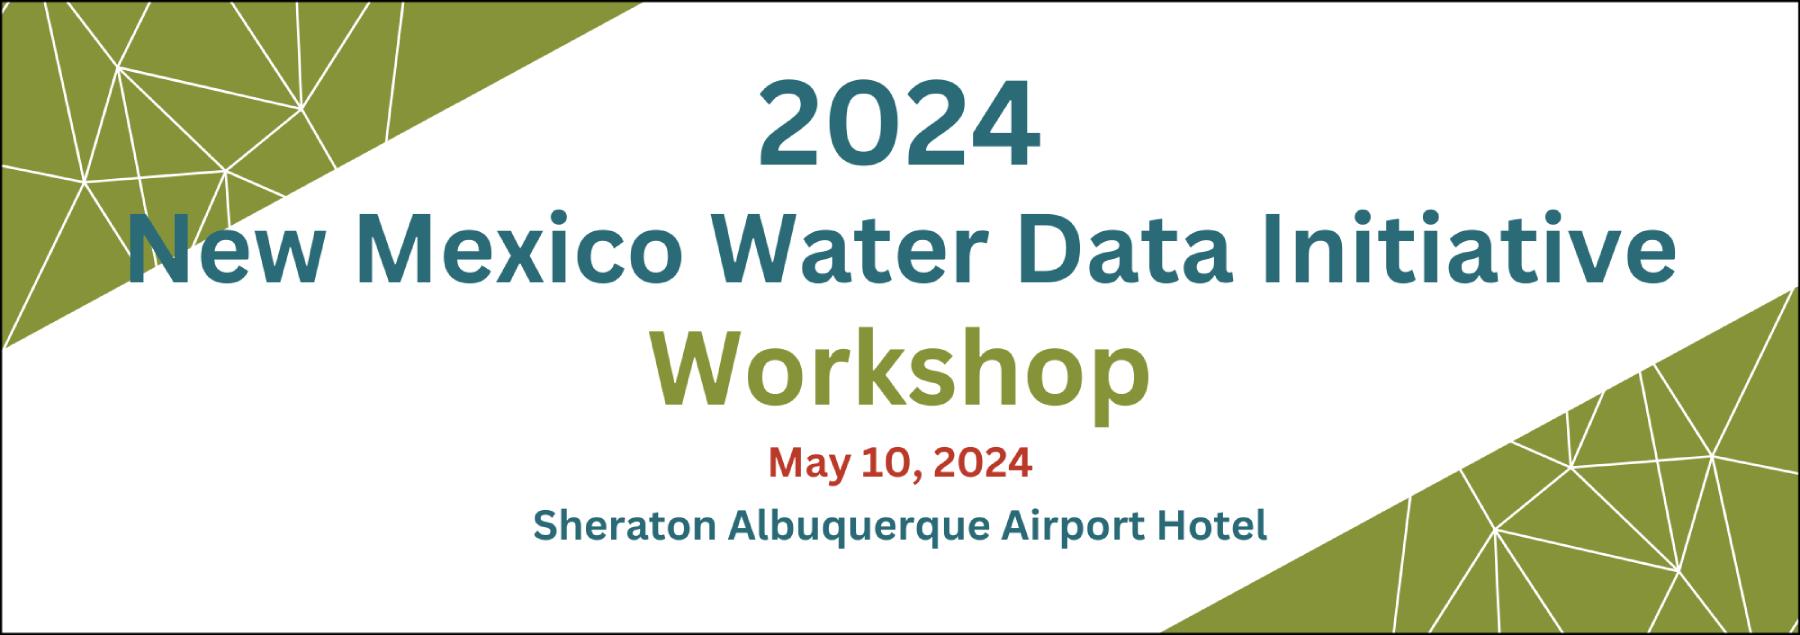 New Mexico Waterdata Initiative Workshop 2024